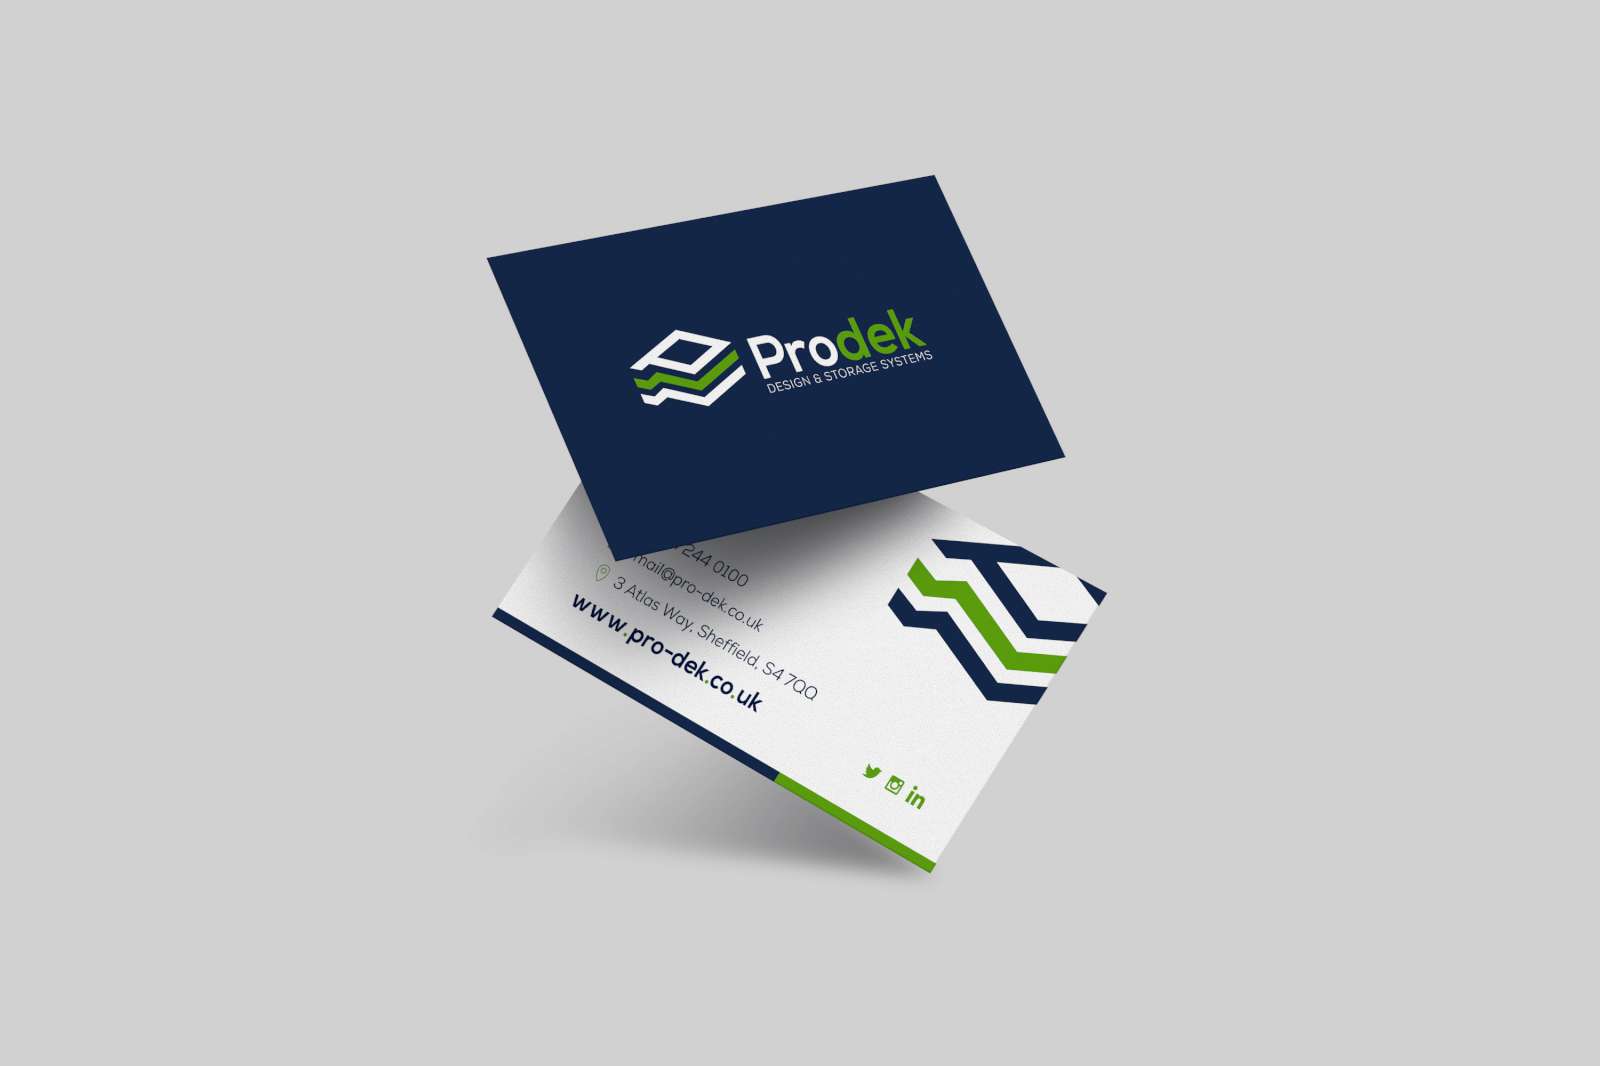 Prodek Rebrand - Fenti Marketing